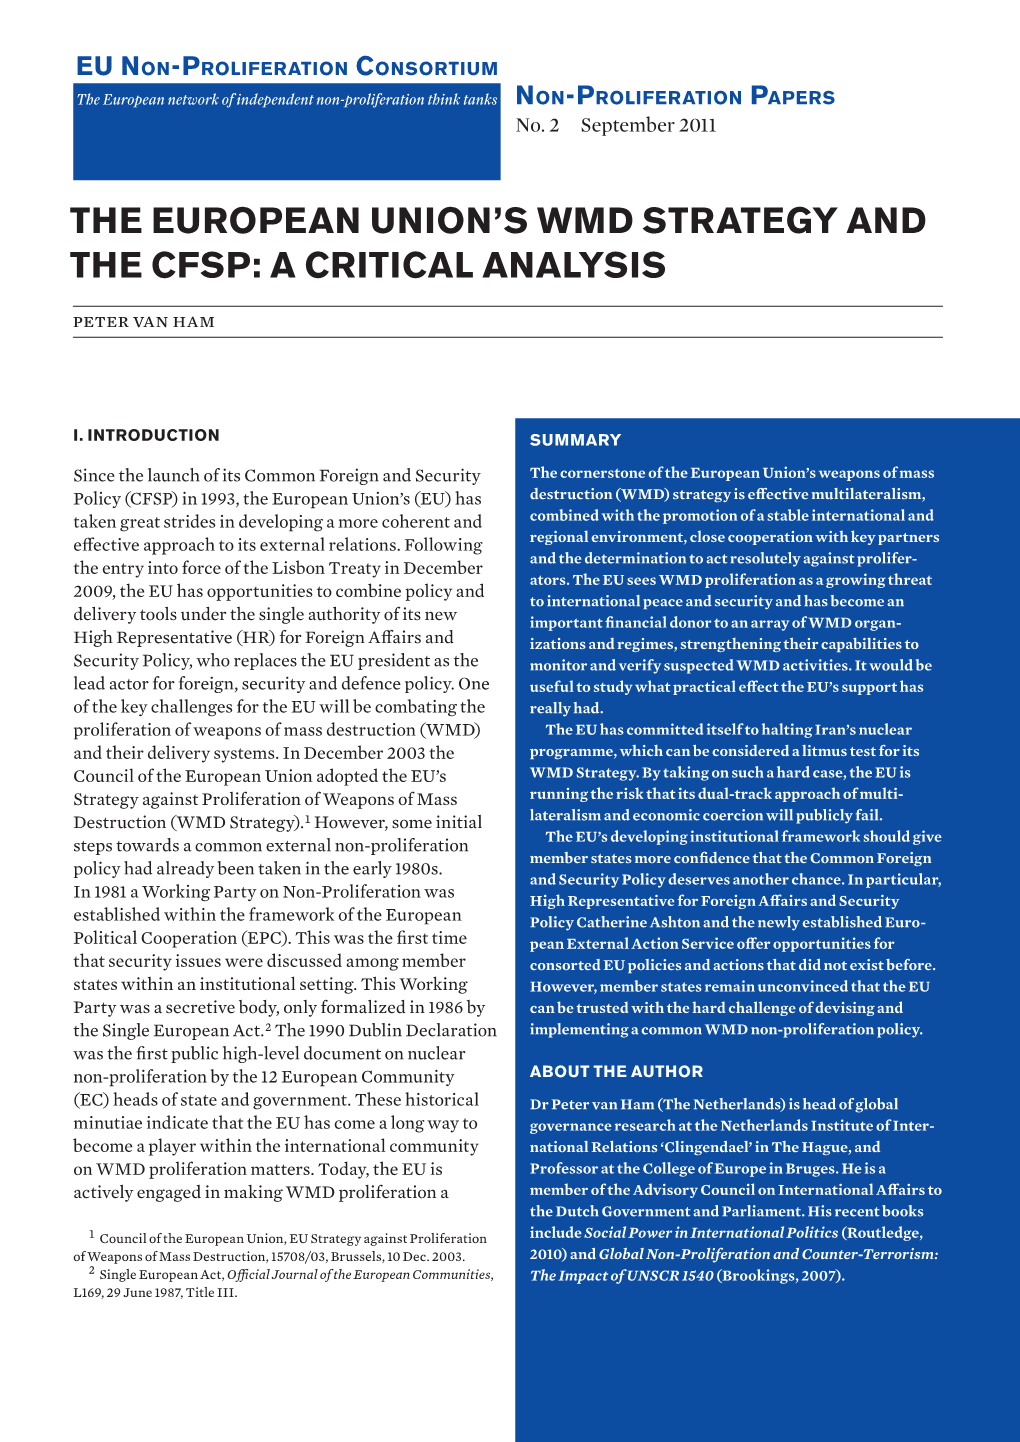 The European Union's Wmd Strategy and the Cfsp: a Critical Analysis (Eu Npc Non Proliferation Papers, No. 2)